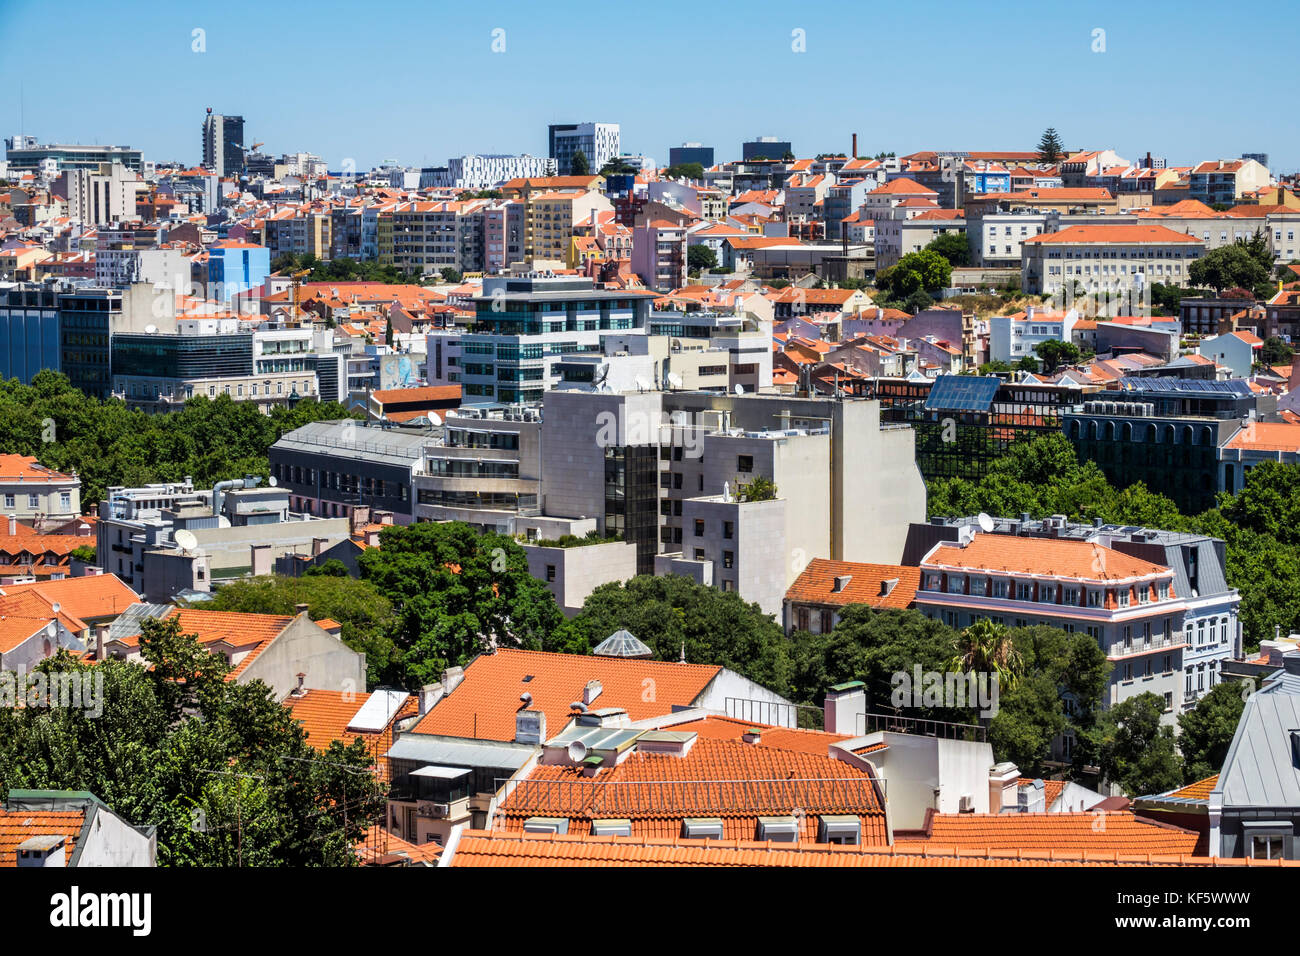 Lisbon Portugal,Bairro Alto,historic district,Principe Real,scenic viewpoint,overlook,city skyline,rooftops,buildings,Baixa Pombalina,Hispanic,immigra Stock Photo